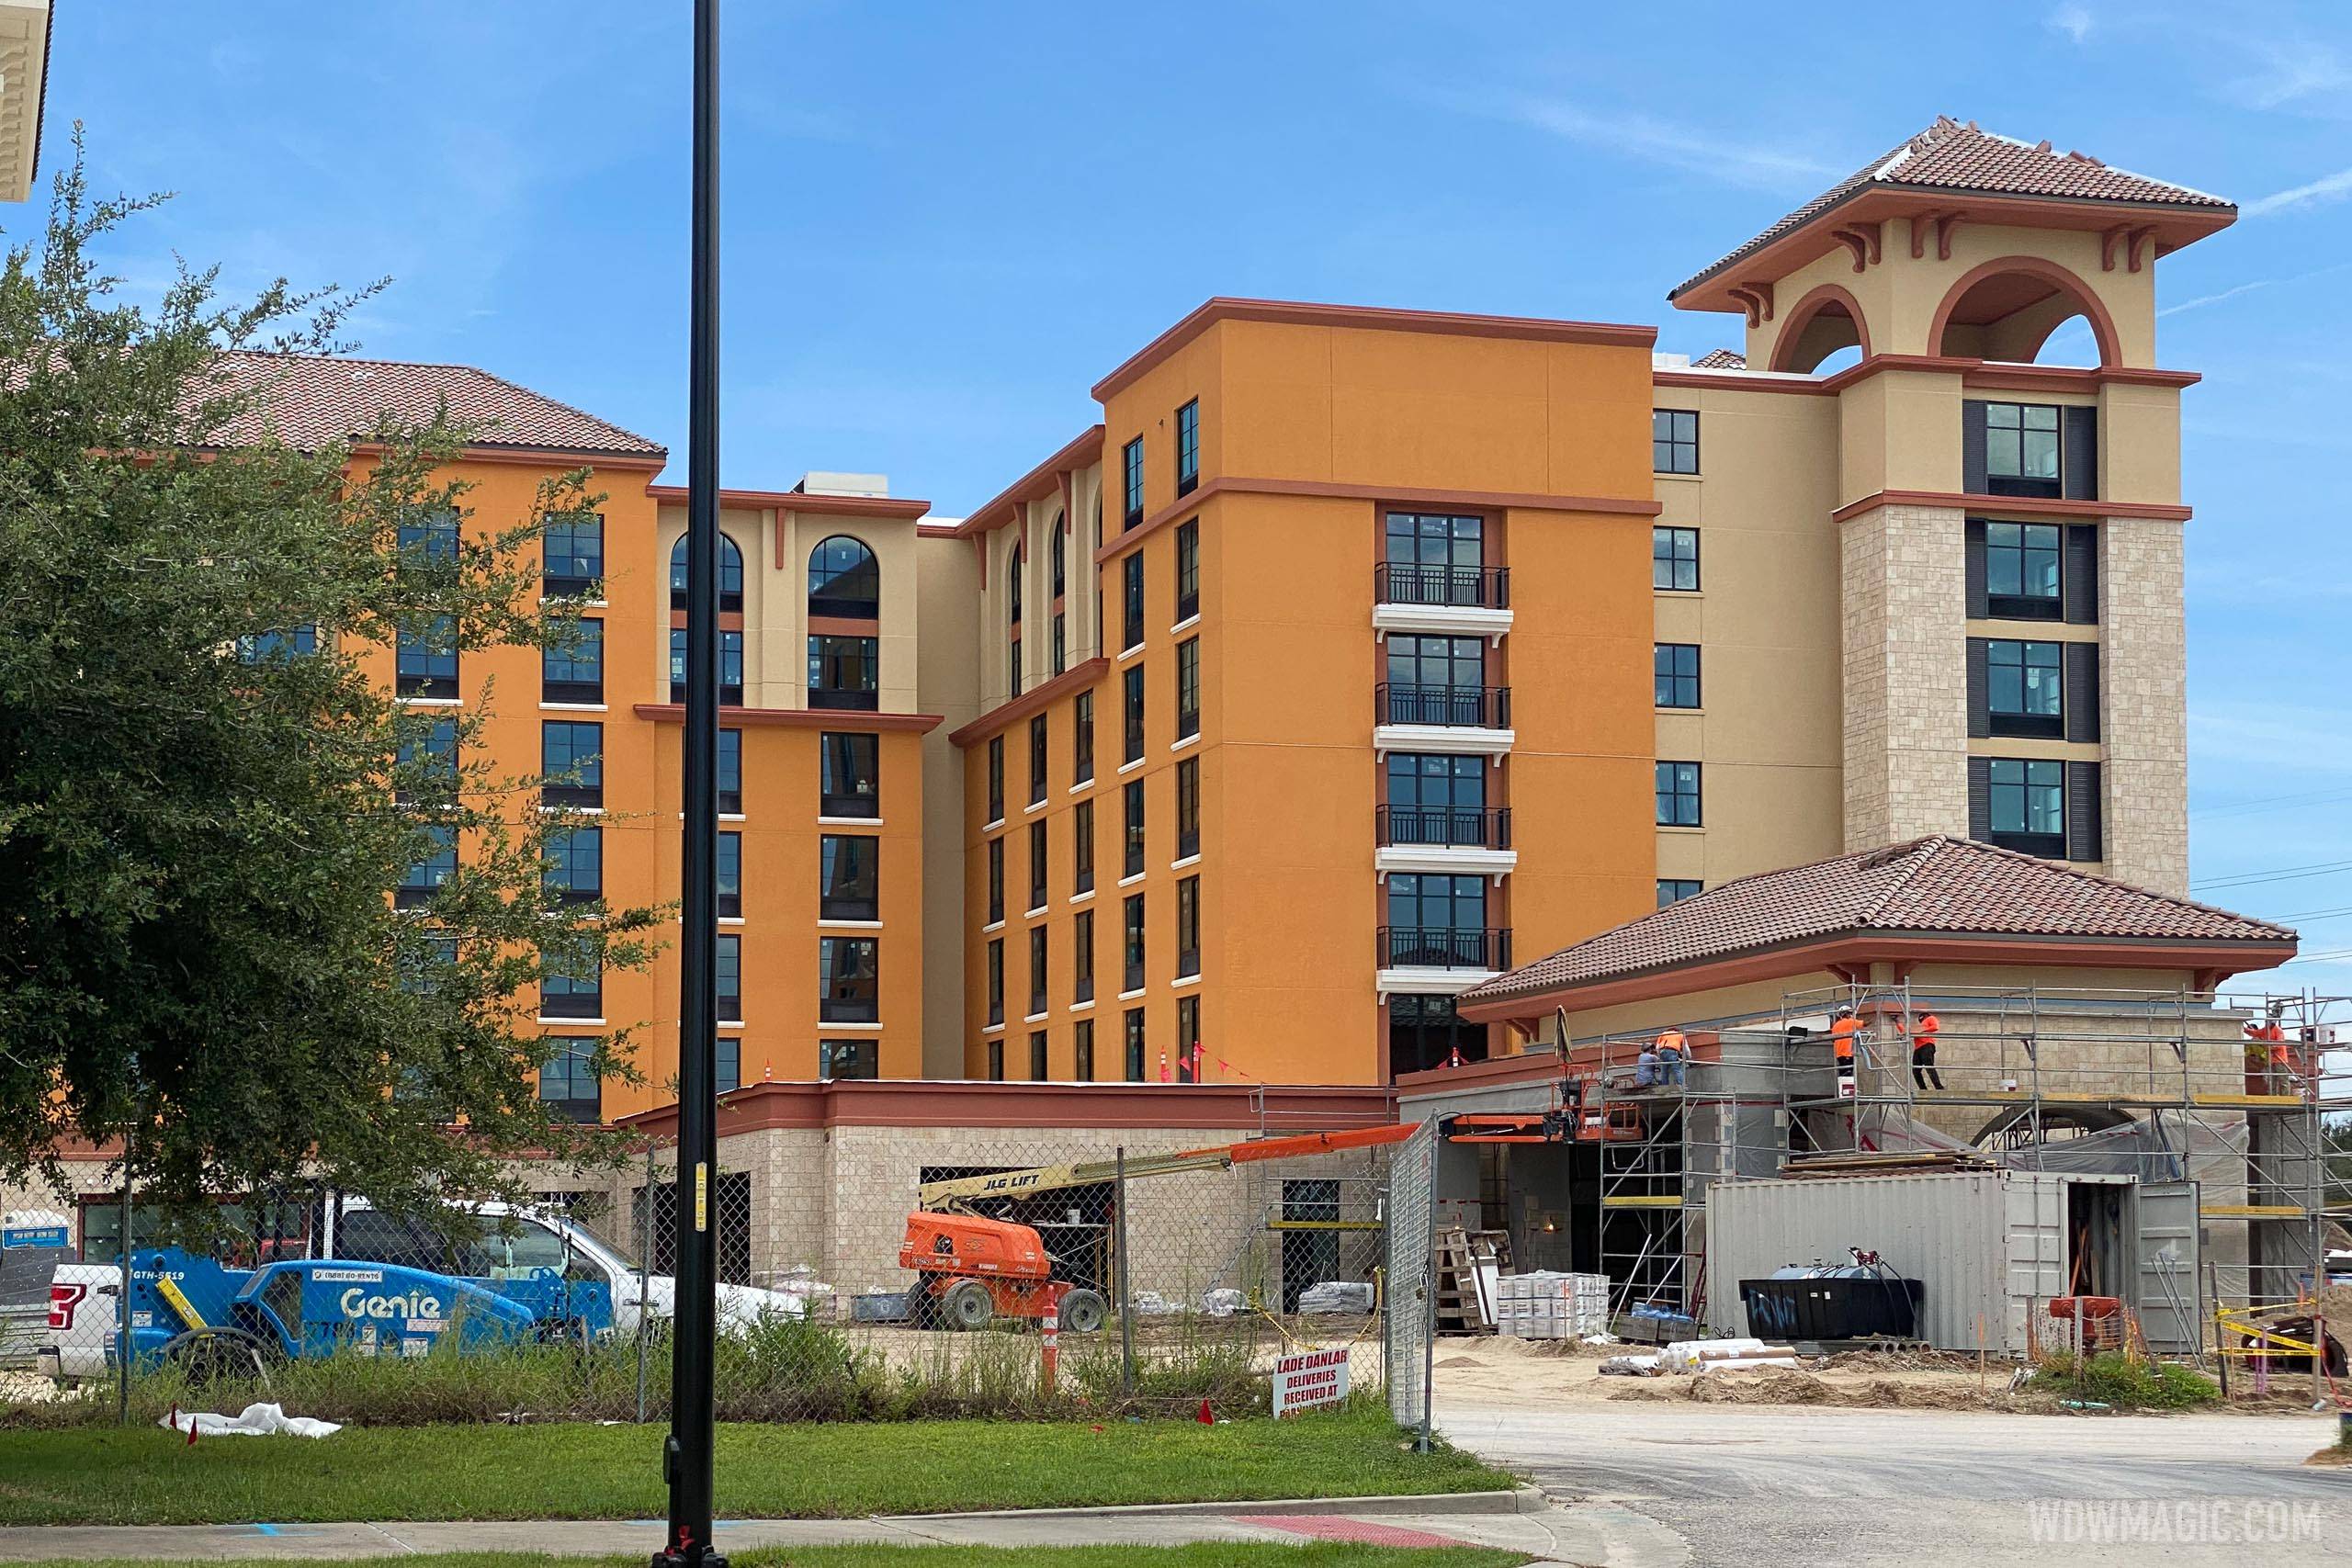 Flamingo Crossings Hotel construction - August 14 2020